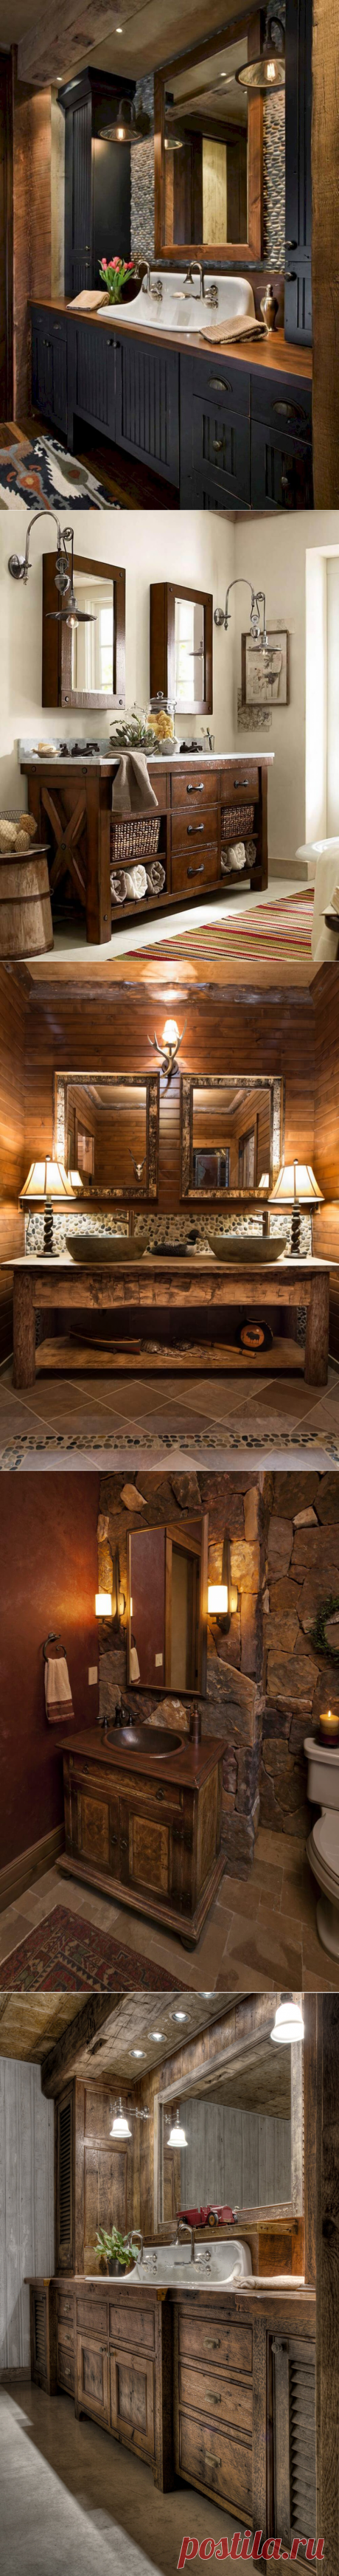 35 Best Rustic Bathroom Vanity Ideas and Designs for 2018